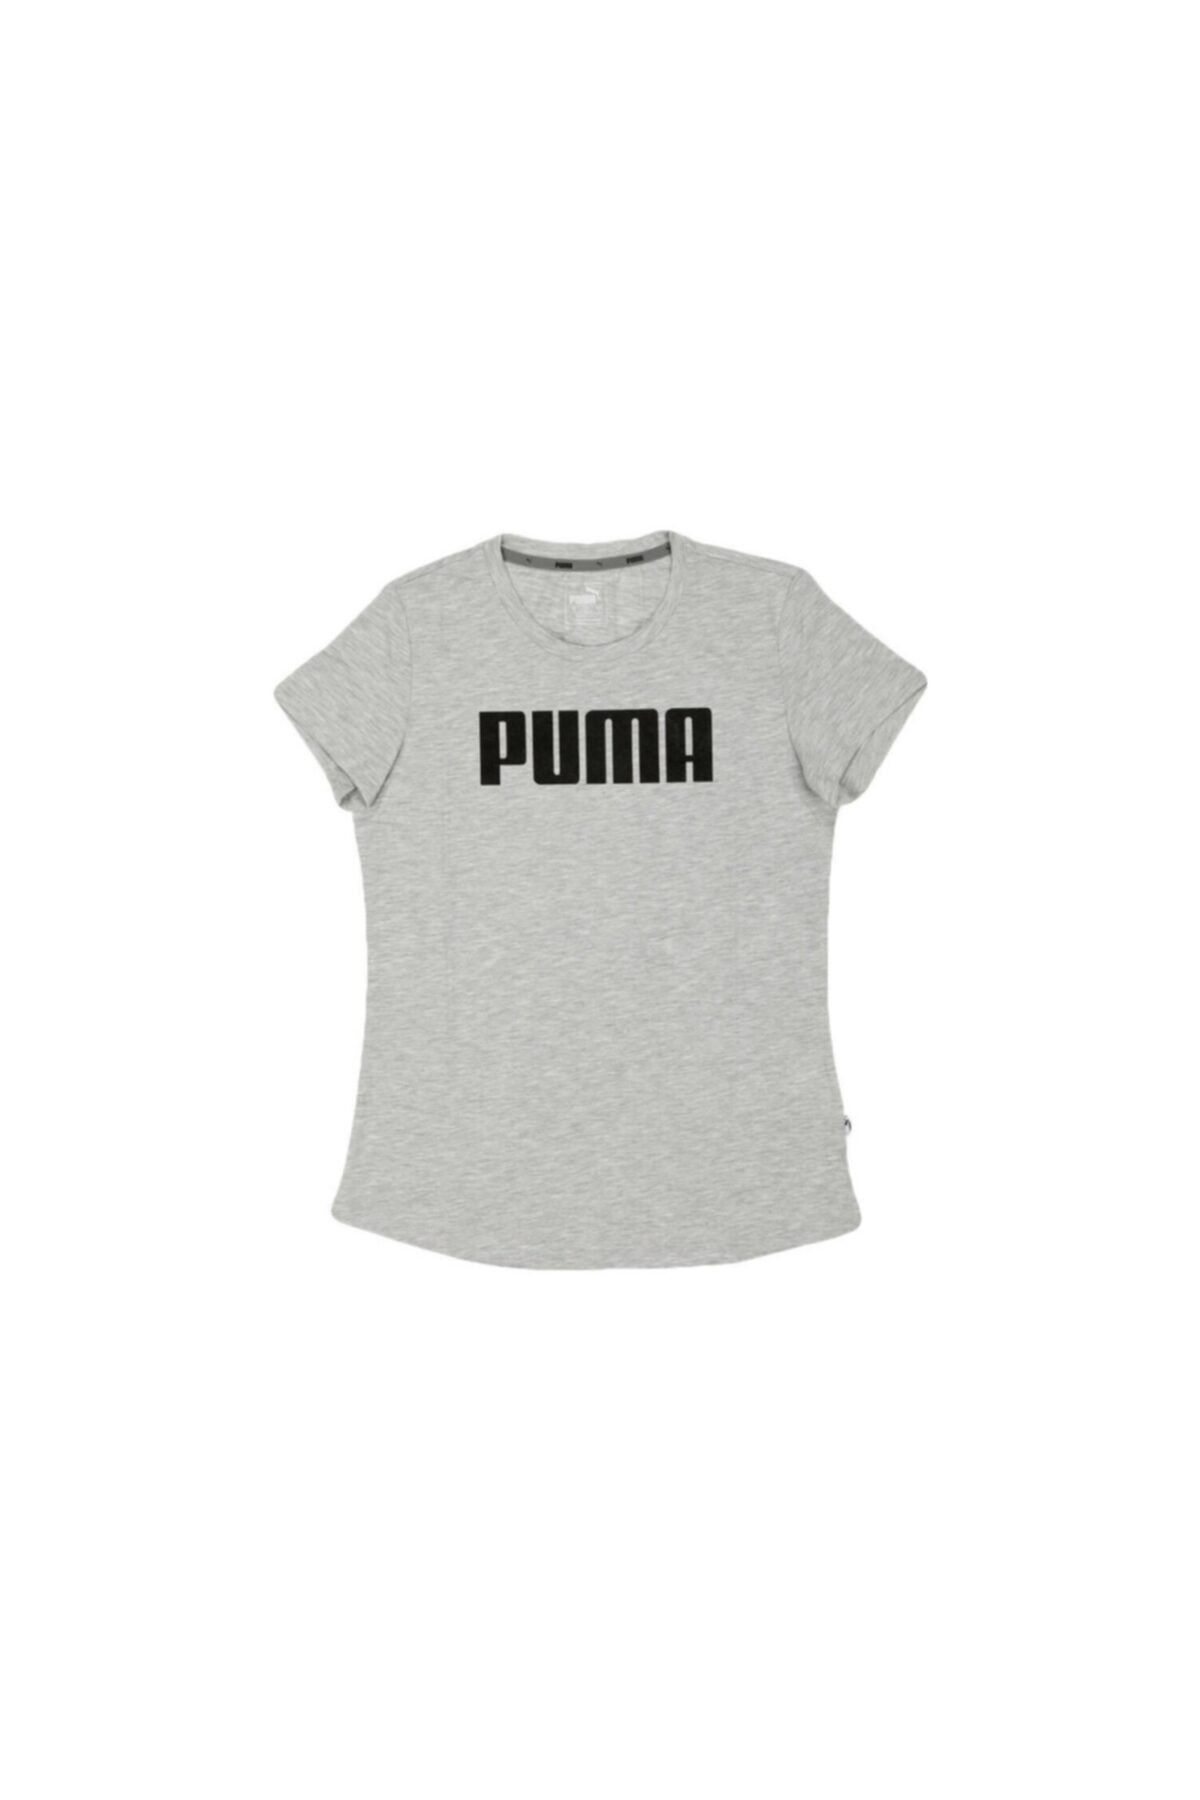 Puma Kadın   Açık Gri Kısa Kol T-Shirt 84543803